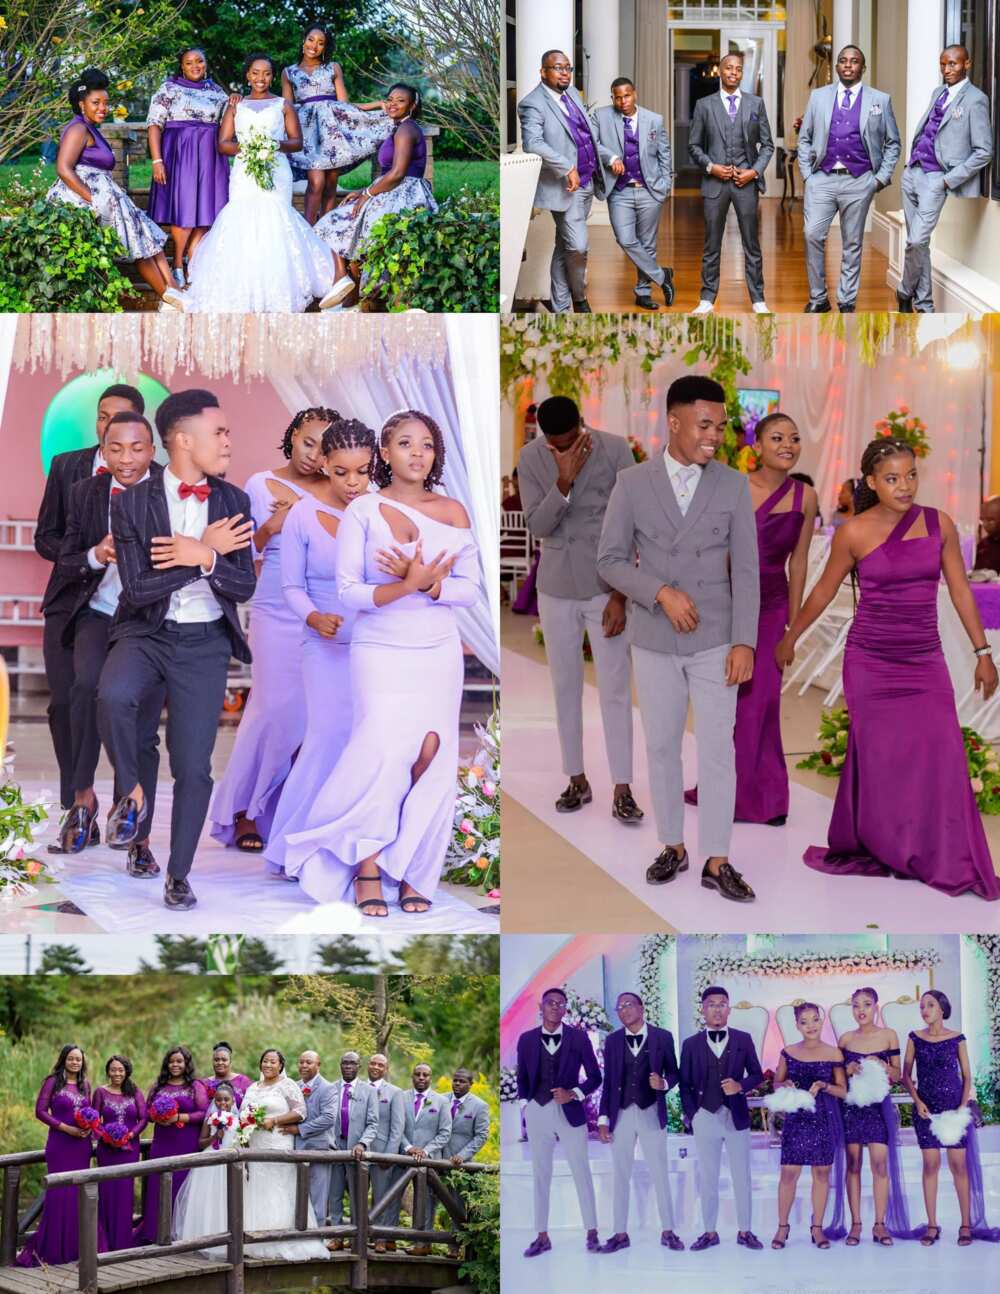 Fall wedding purple color scheme